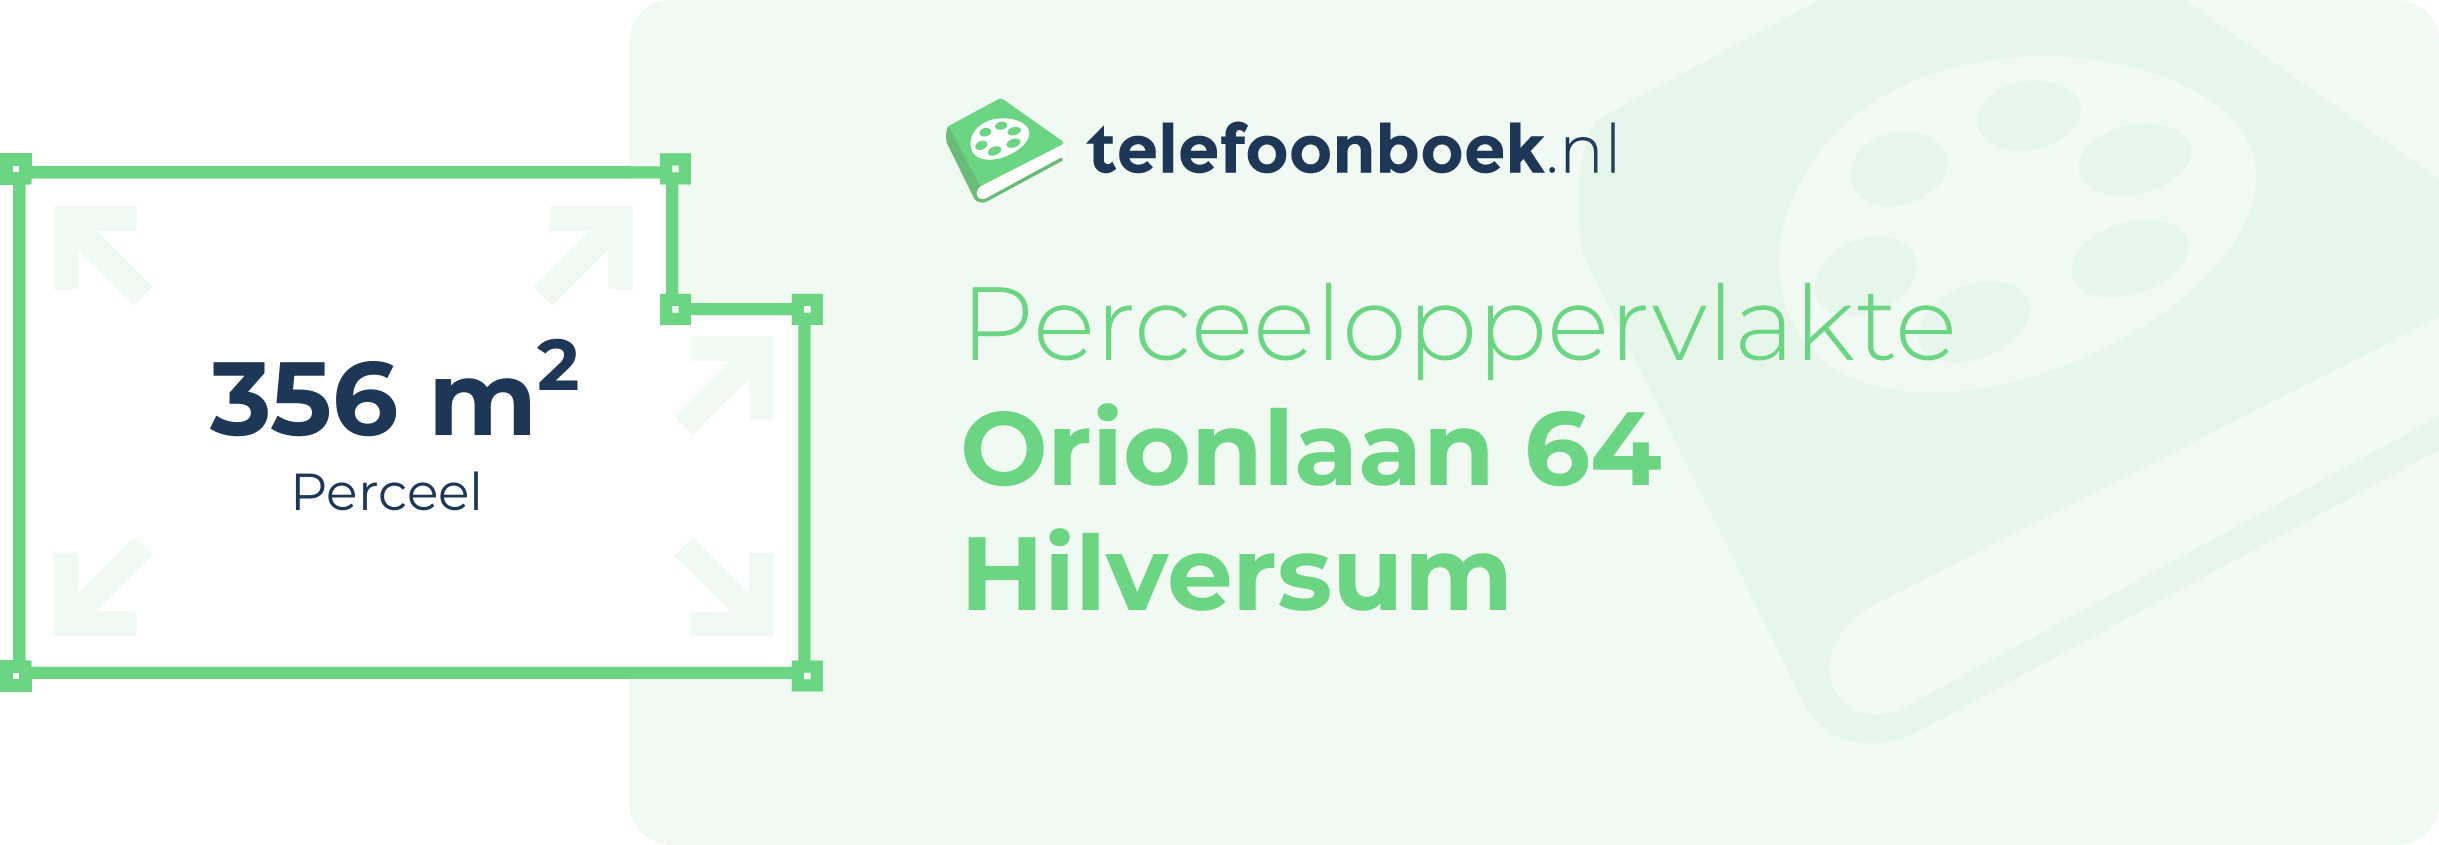 Perceeloppervlakte Orionlaan 64 Hilversum